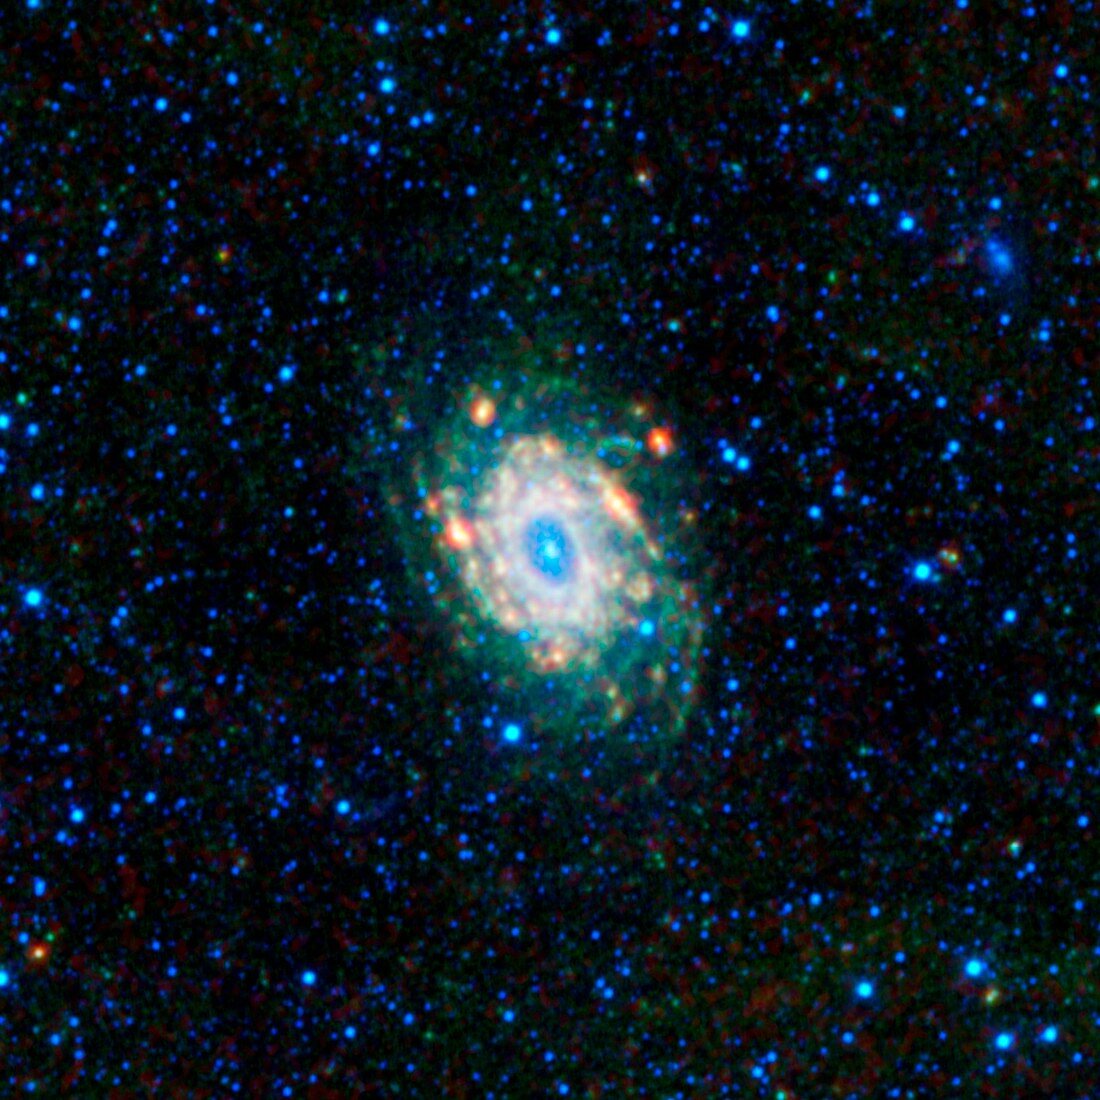 NGC 6744 spiral galaxy,infrared image